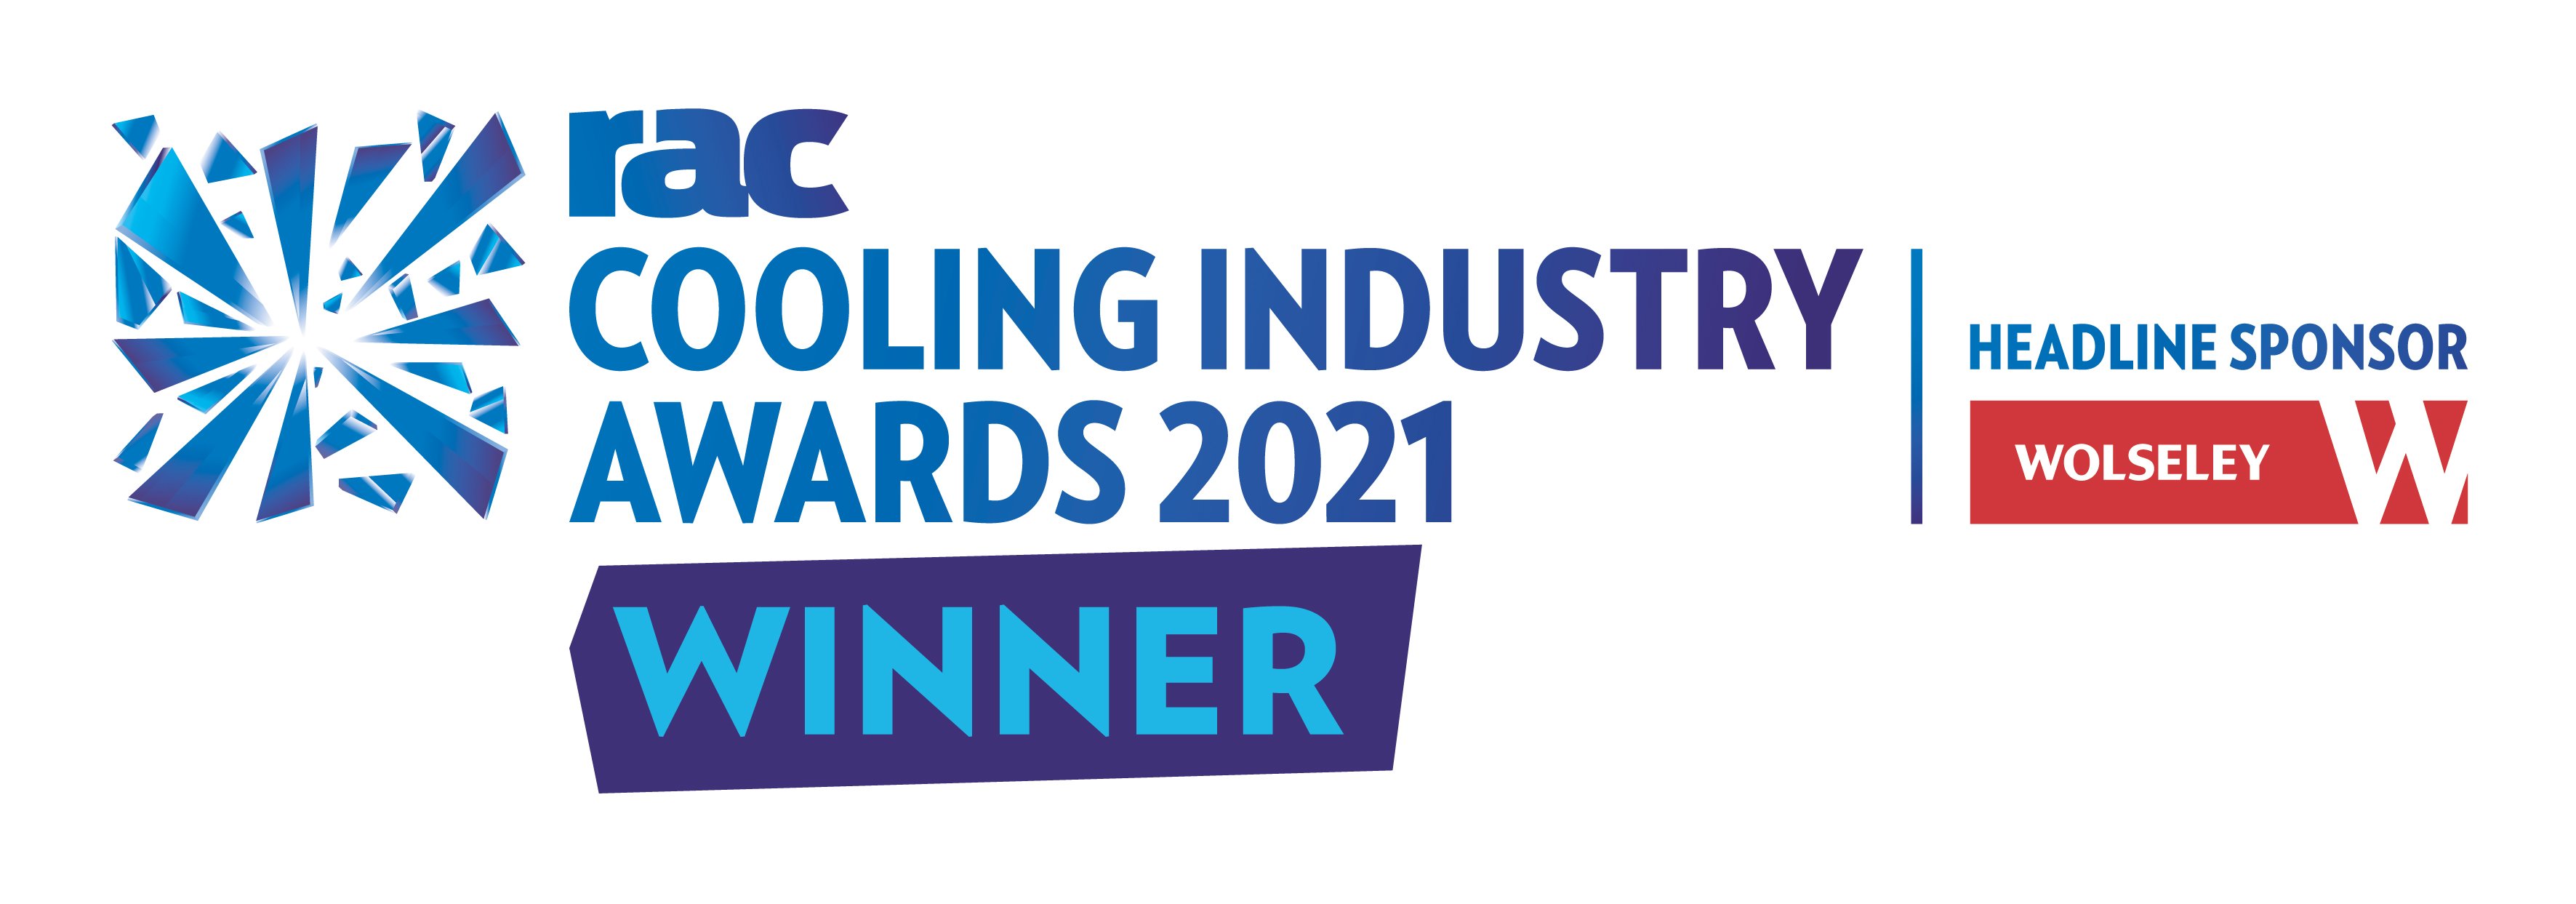 Cooling Awards 2021 Participation Logos Winner Hr